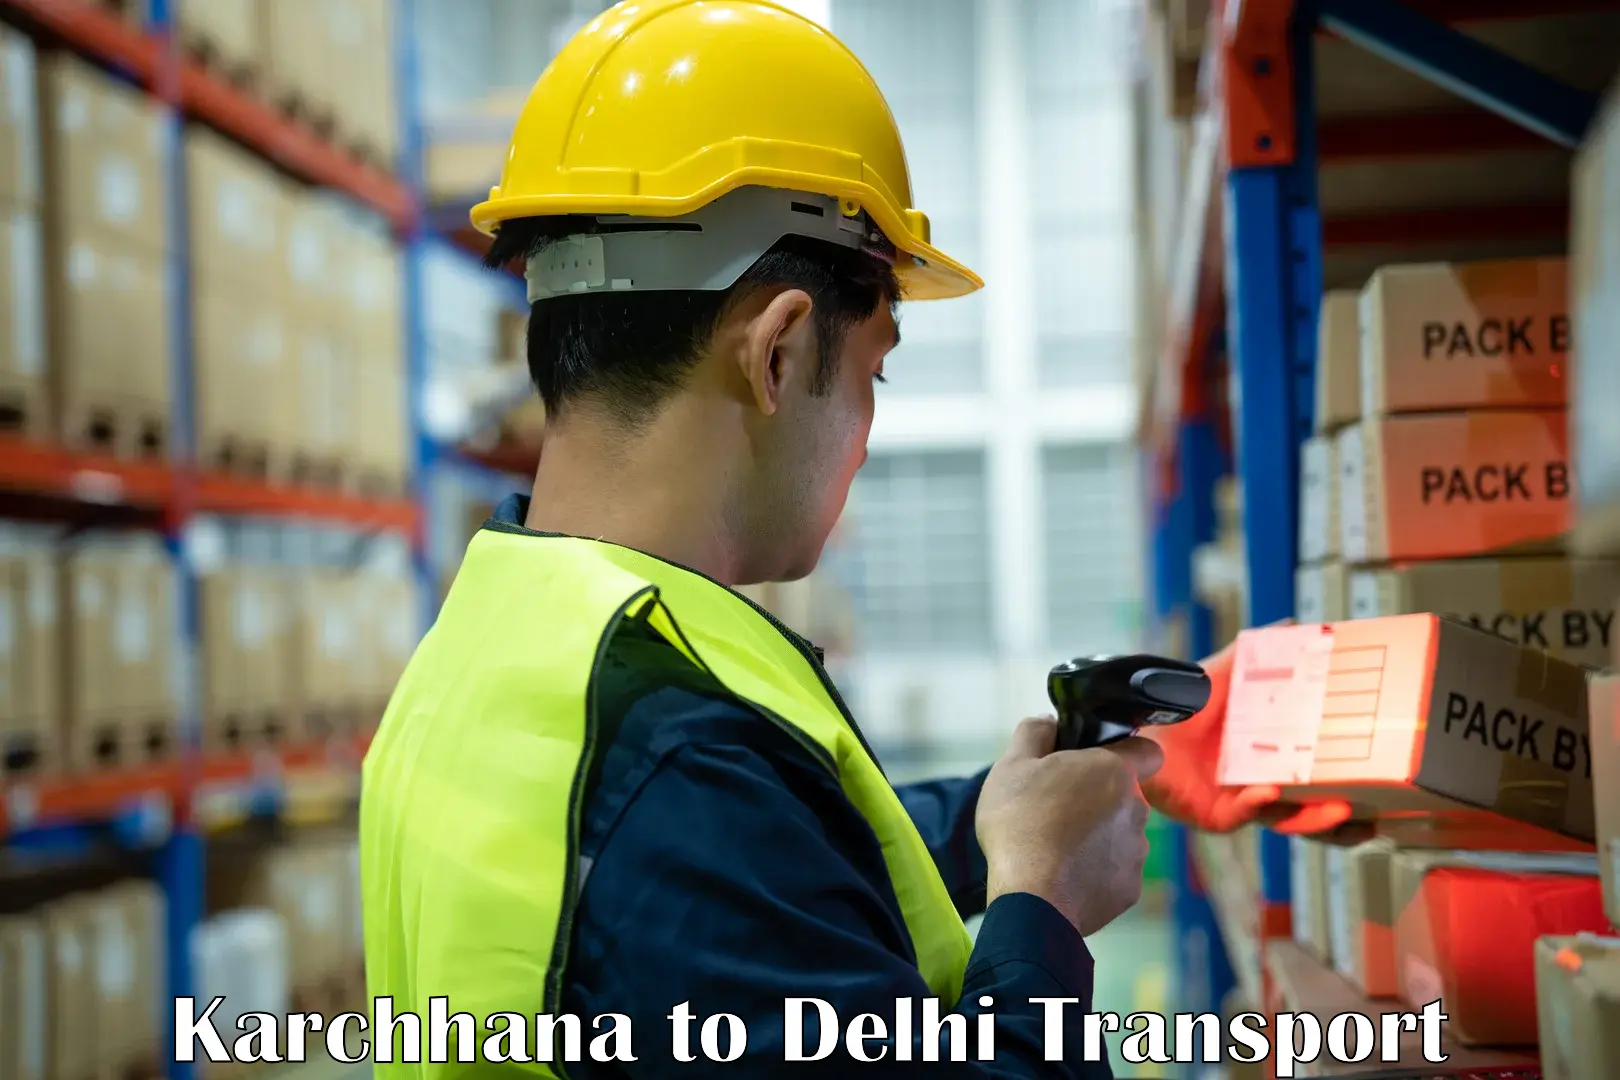 Truck transport companies in India Karchhana to East Delhi